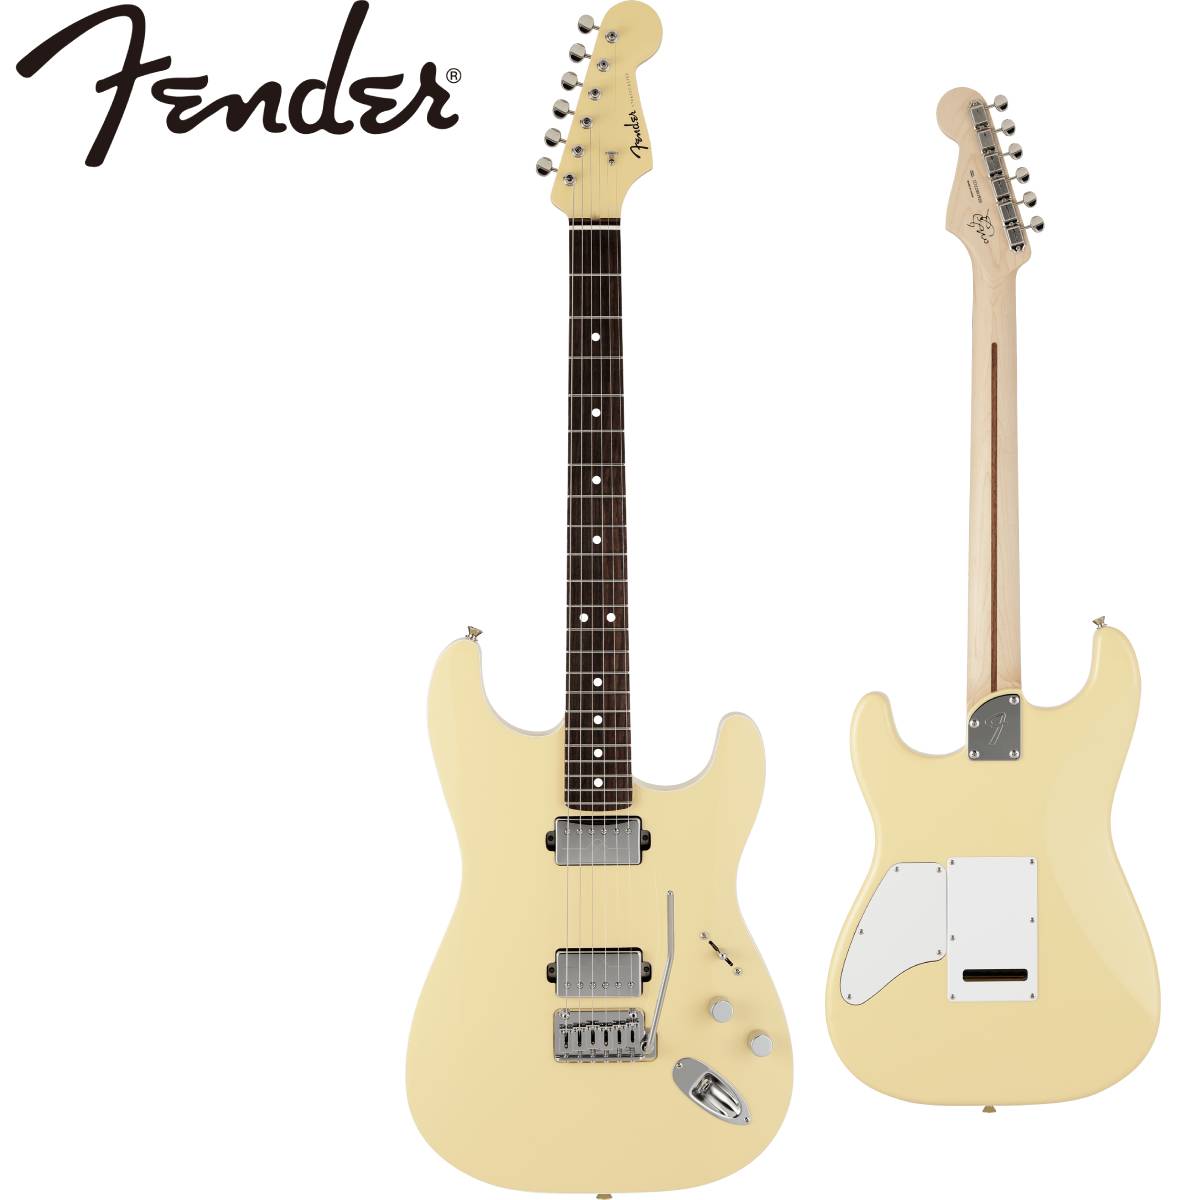 Fender MAMI STRATOCASTER OMOCHI -Vintage White- 新品[フェンダー][マミ][SCANDAL,スキャンダル][White,ホワイト,白][ストラトキャスター,ST][Electric Guitar,エレキギター]